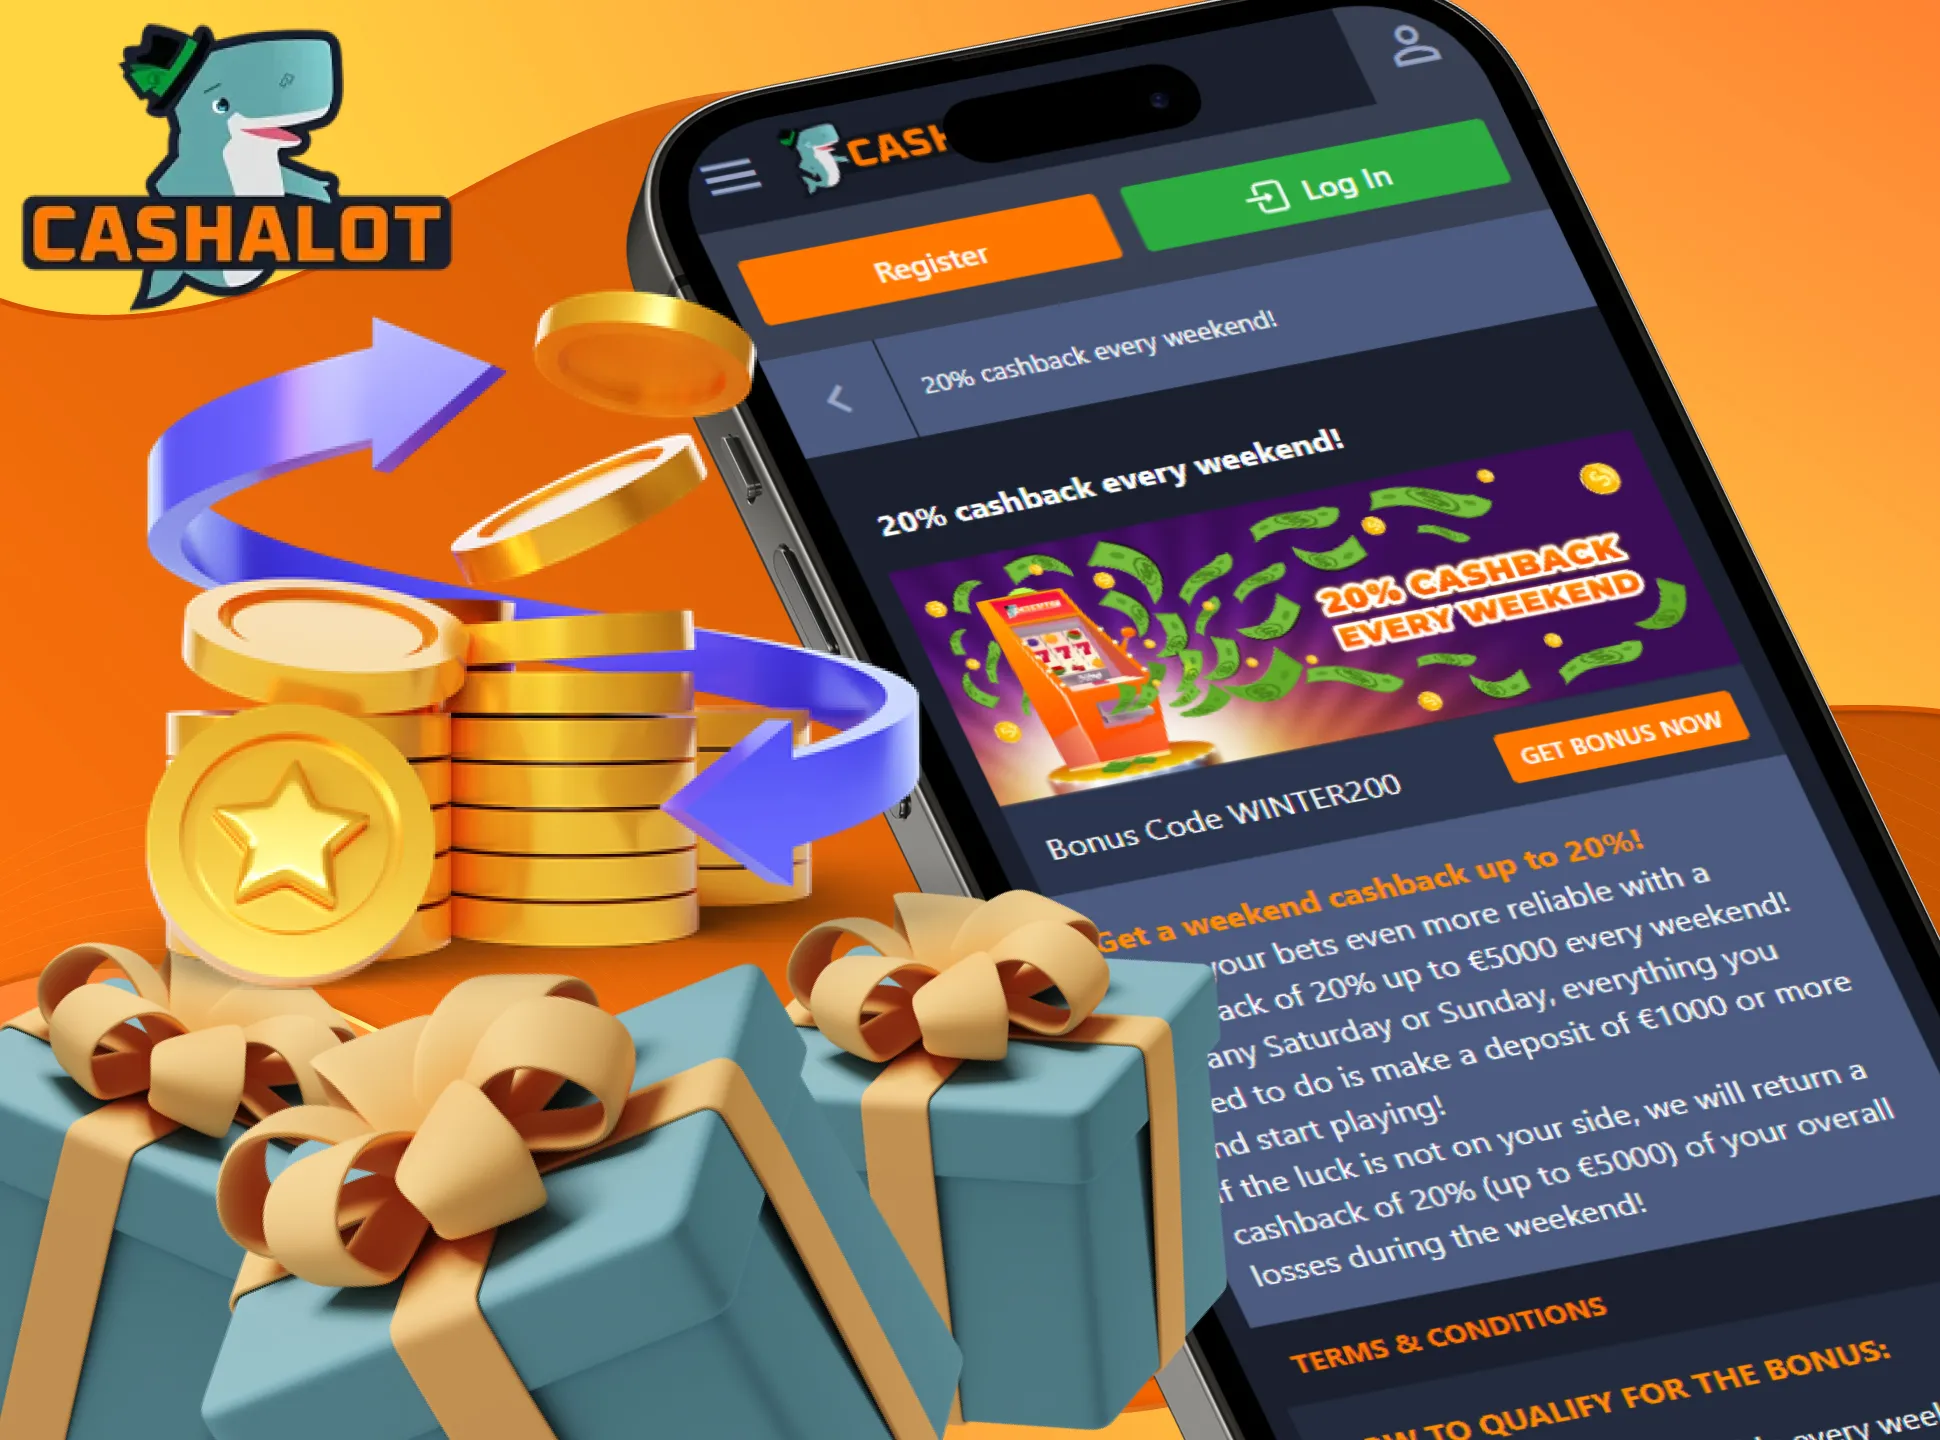 Get cashback after each deposit in the Cashalot app.